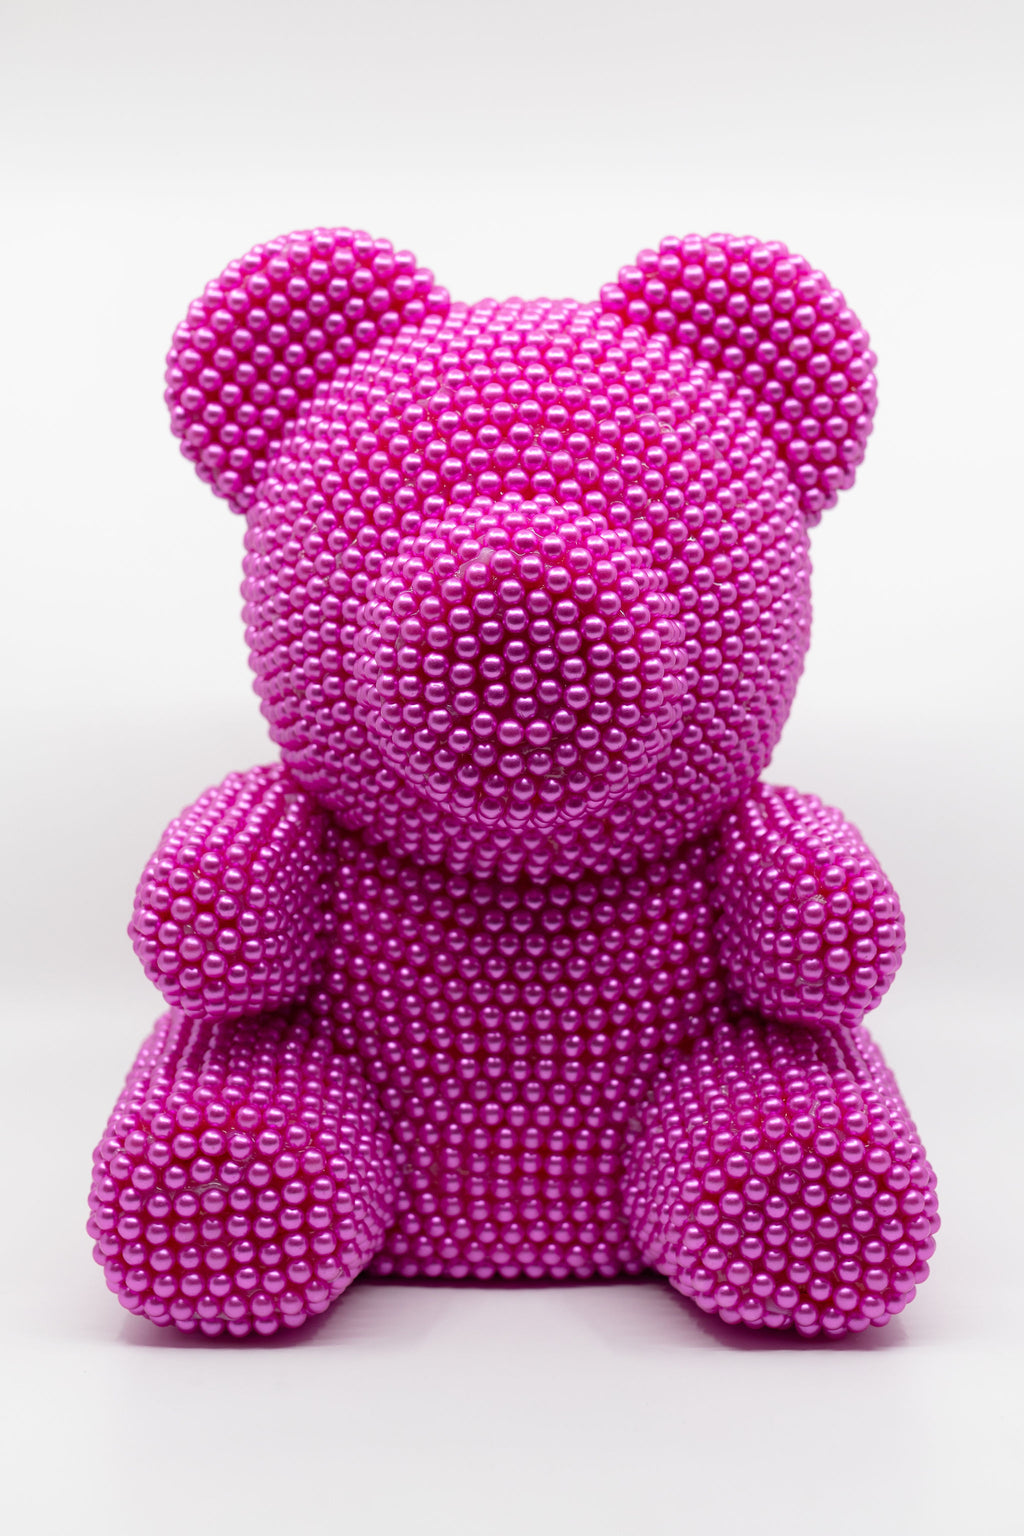 Hot Pink Pearl 25mm Teddy Bear Pony Beads (24pcs)